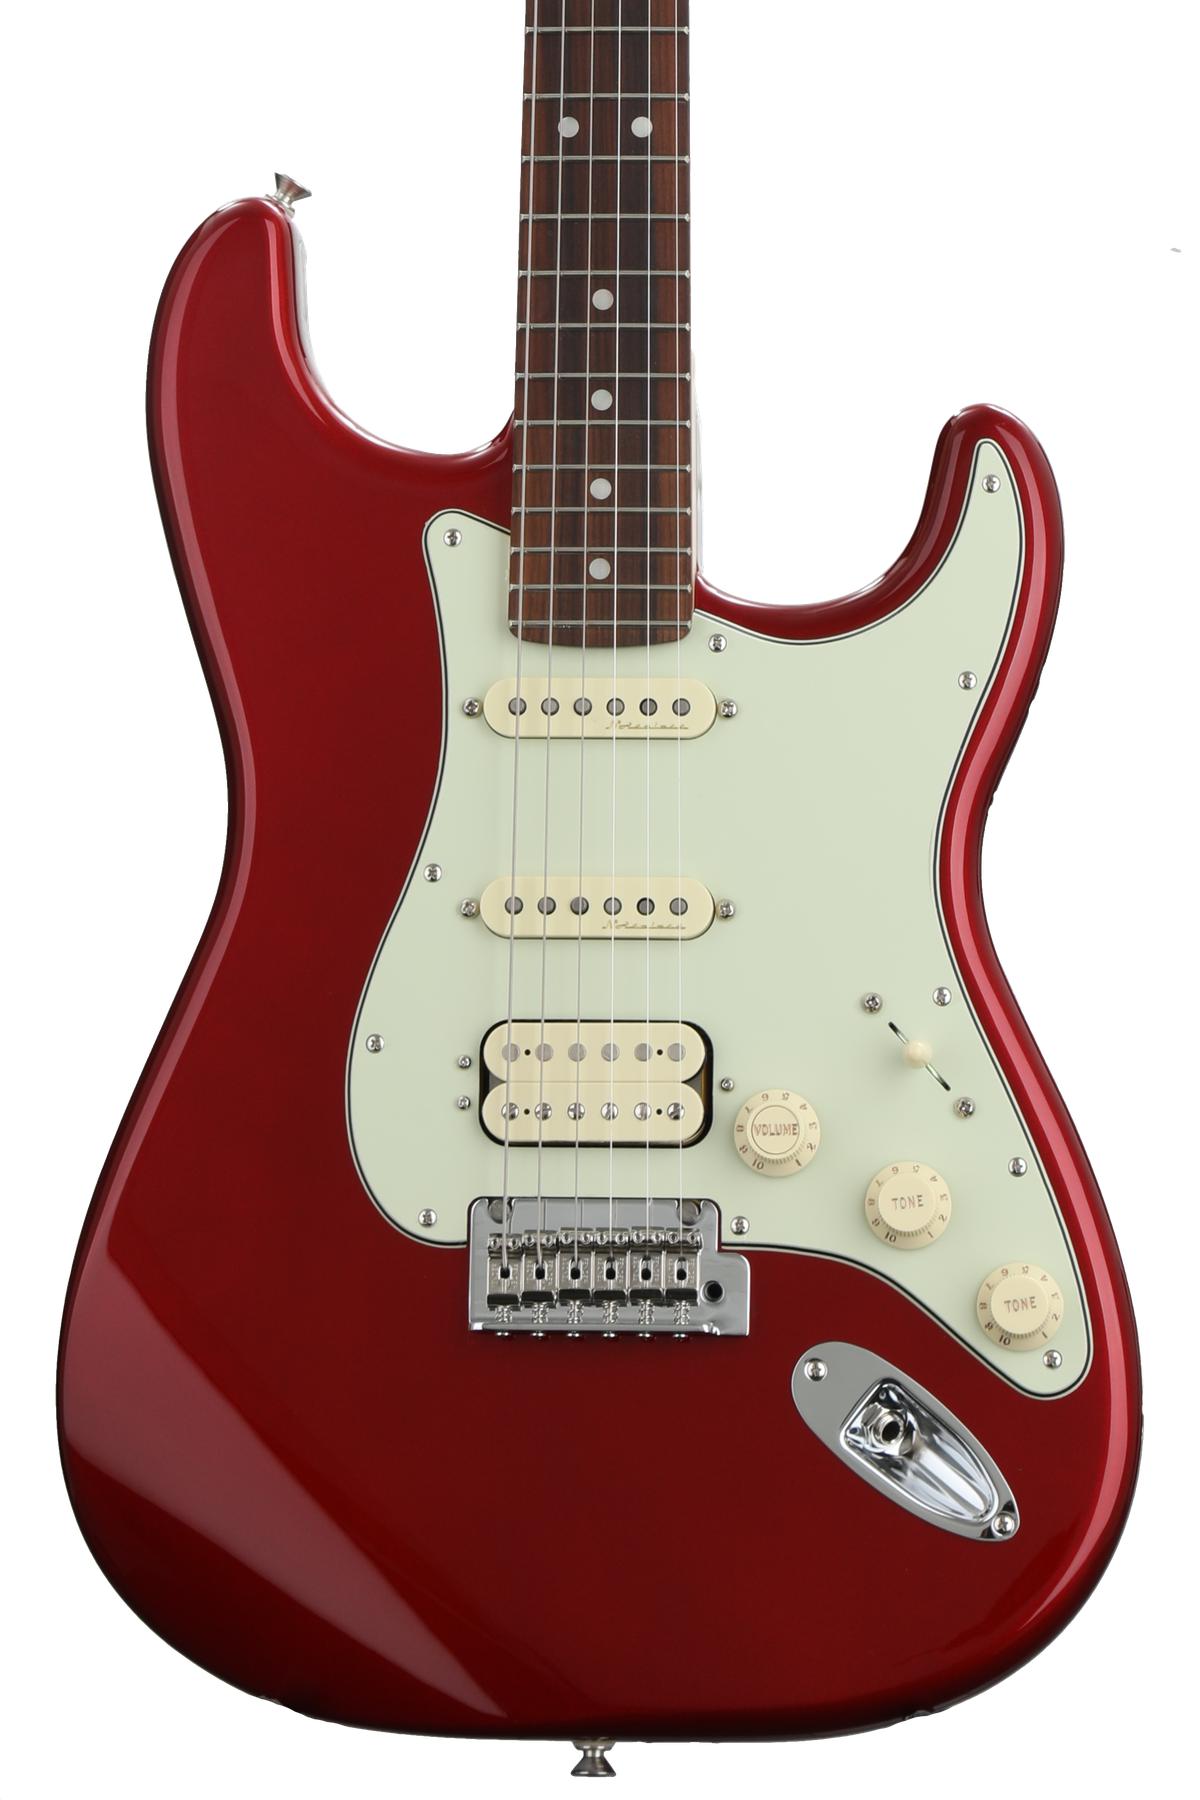 Электрогитара hss. Электрогитара Fender Stratocaster. Deluxe Strat® HSS. Фендер стратокастер HSS. Электрогитара Fender Stratocaster Red.